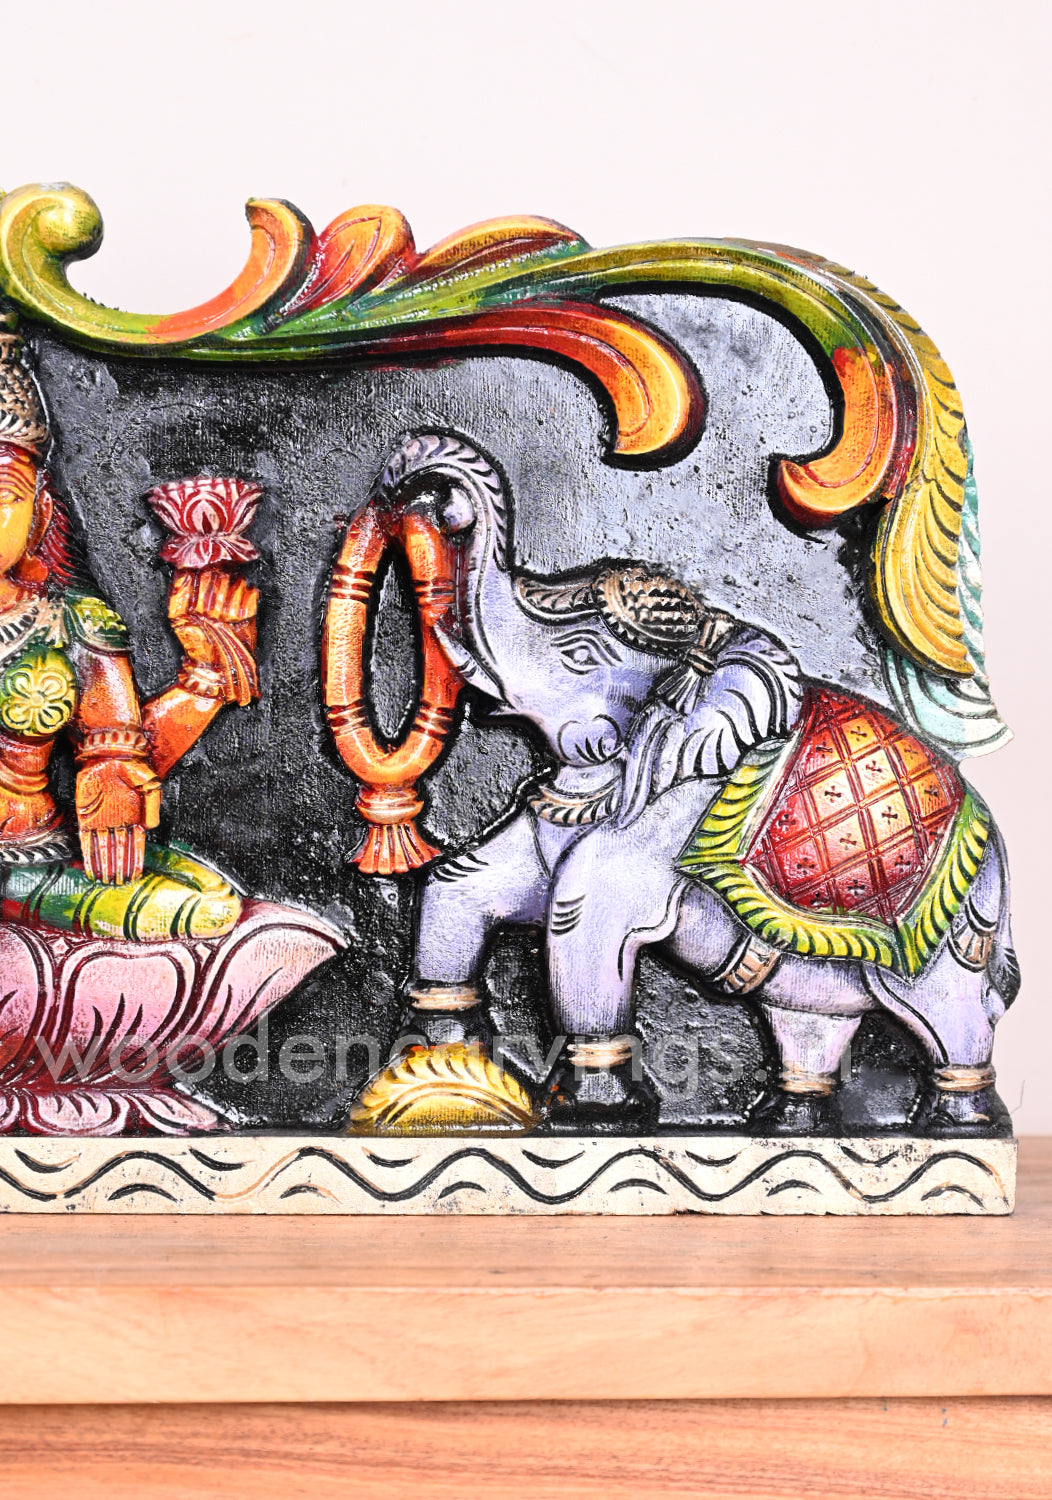 Light Weight Gorgeous Gaja Lakshmi With Grey Paired Elephants Entrance Decor Wall Panel 25"